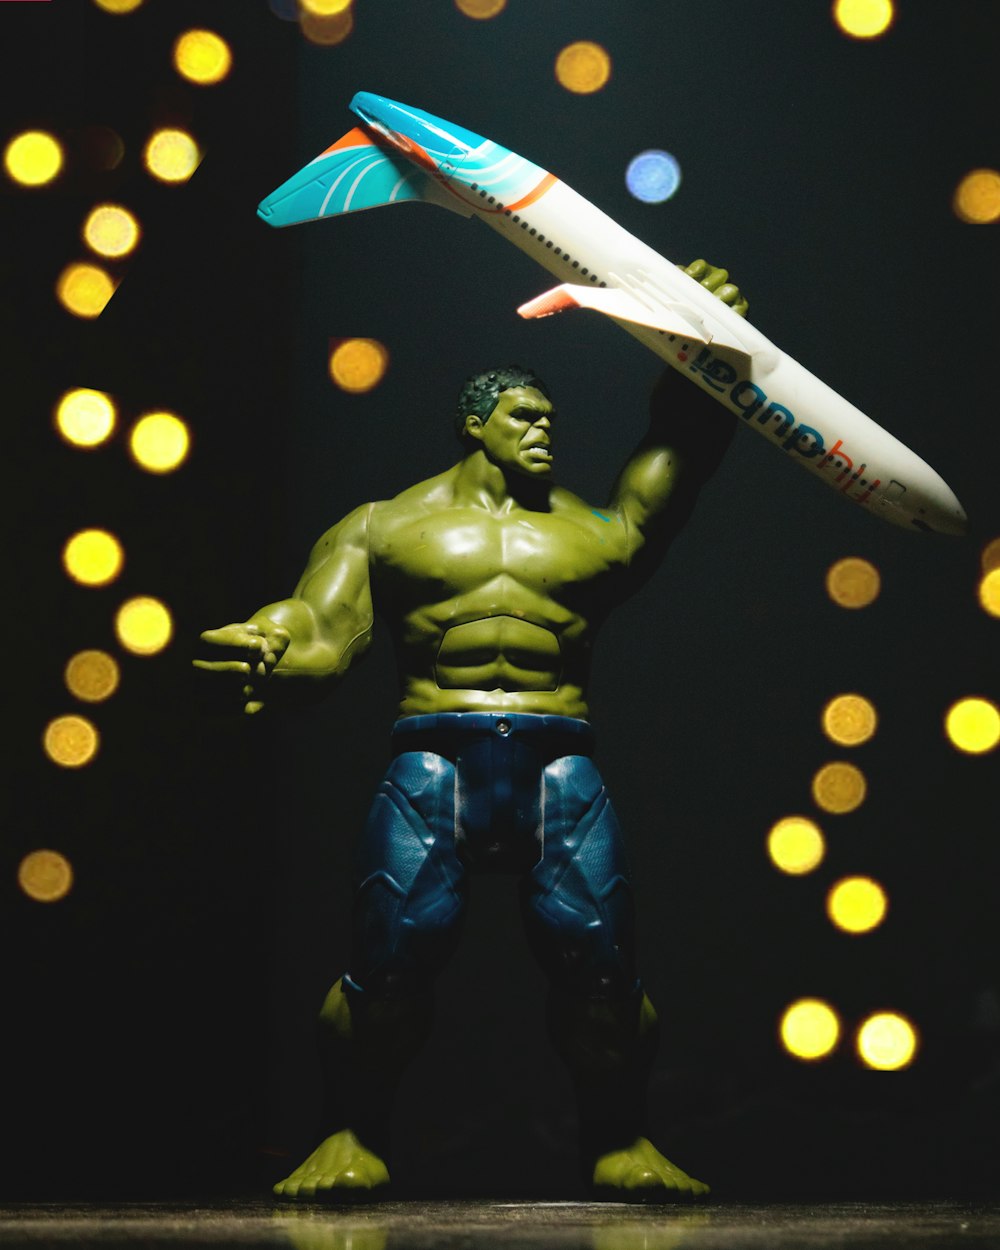 Marvel Hulk holding airplane toy